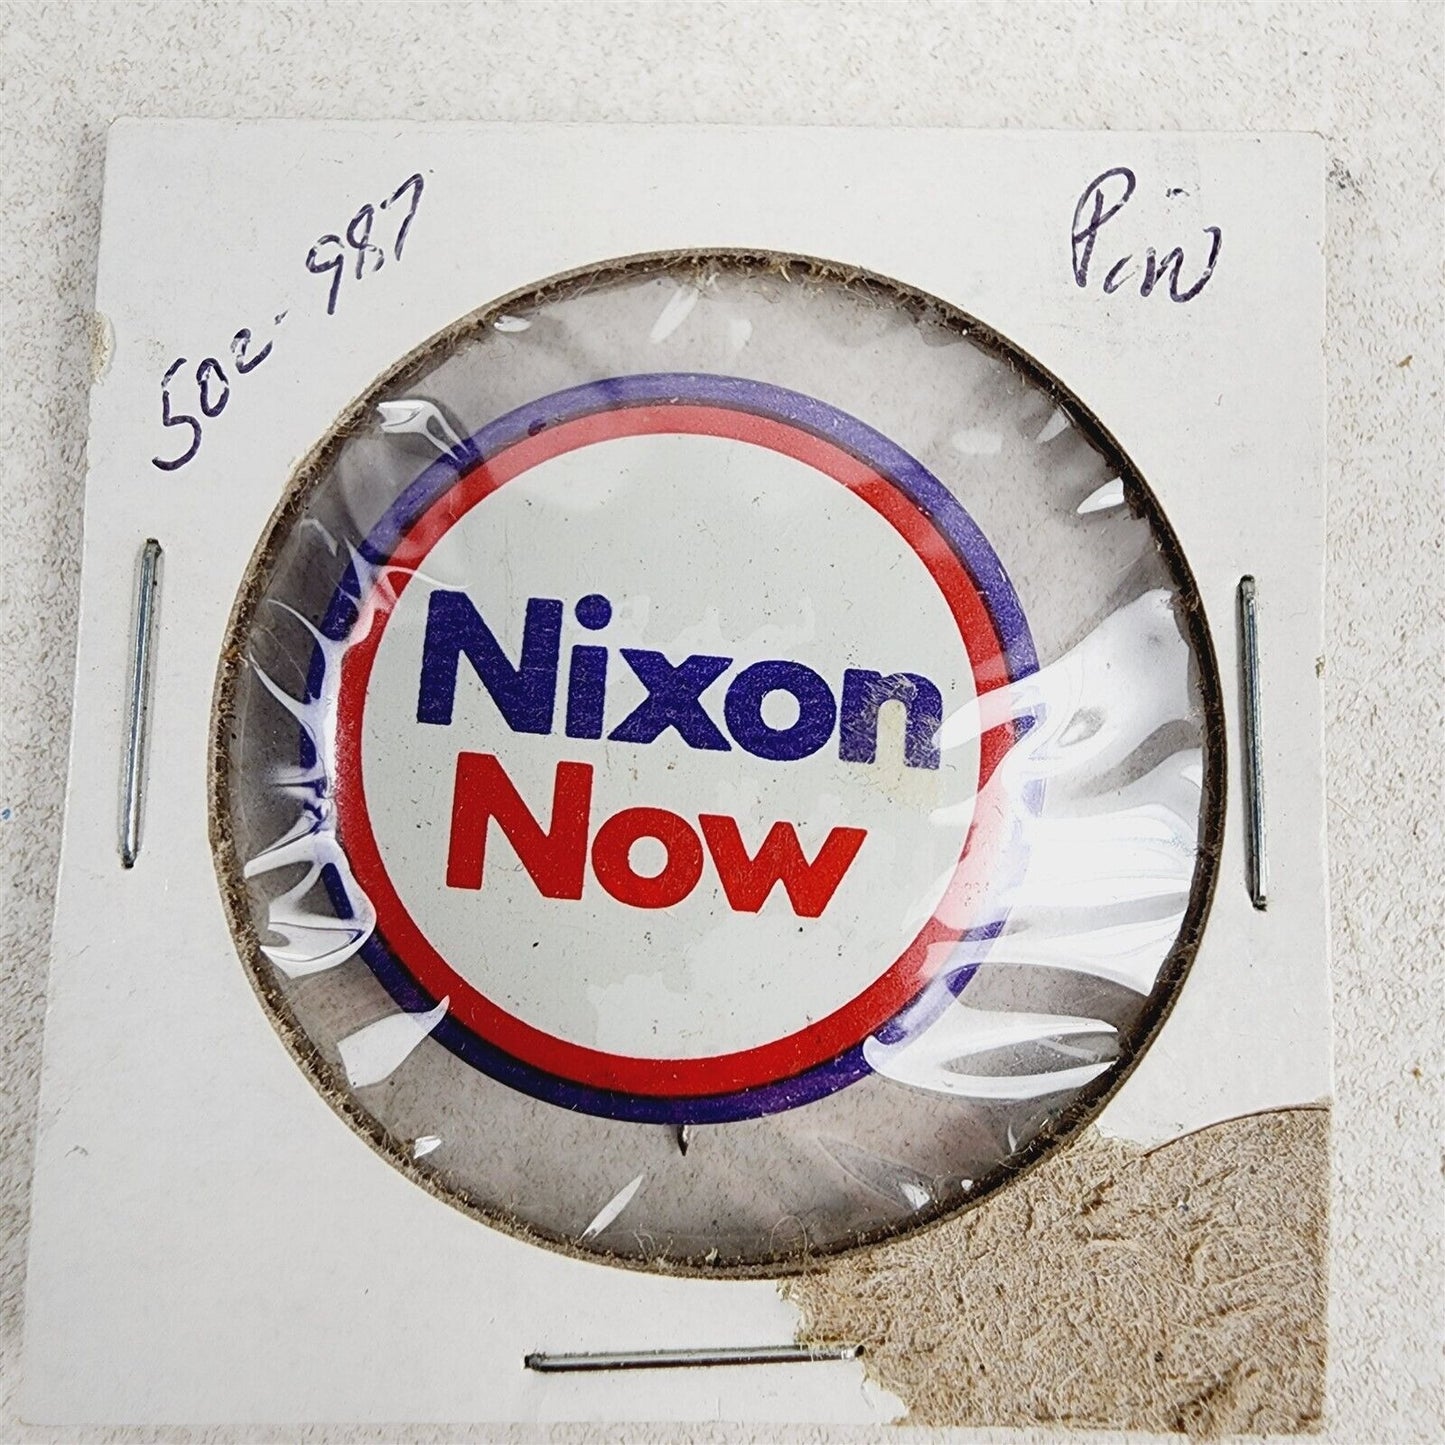 6 Vintage Political Pins Willkie McNary Muskie Humphrey LBJ Nixon Landon Knox